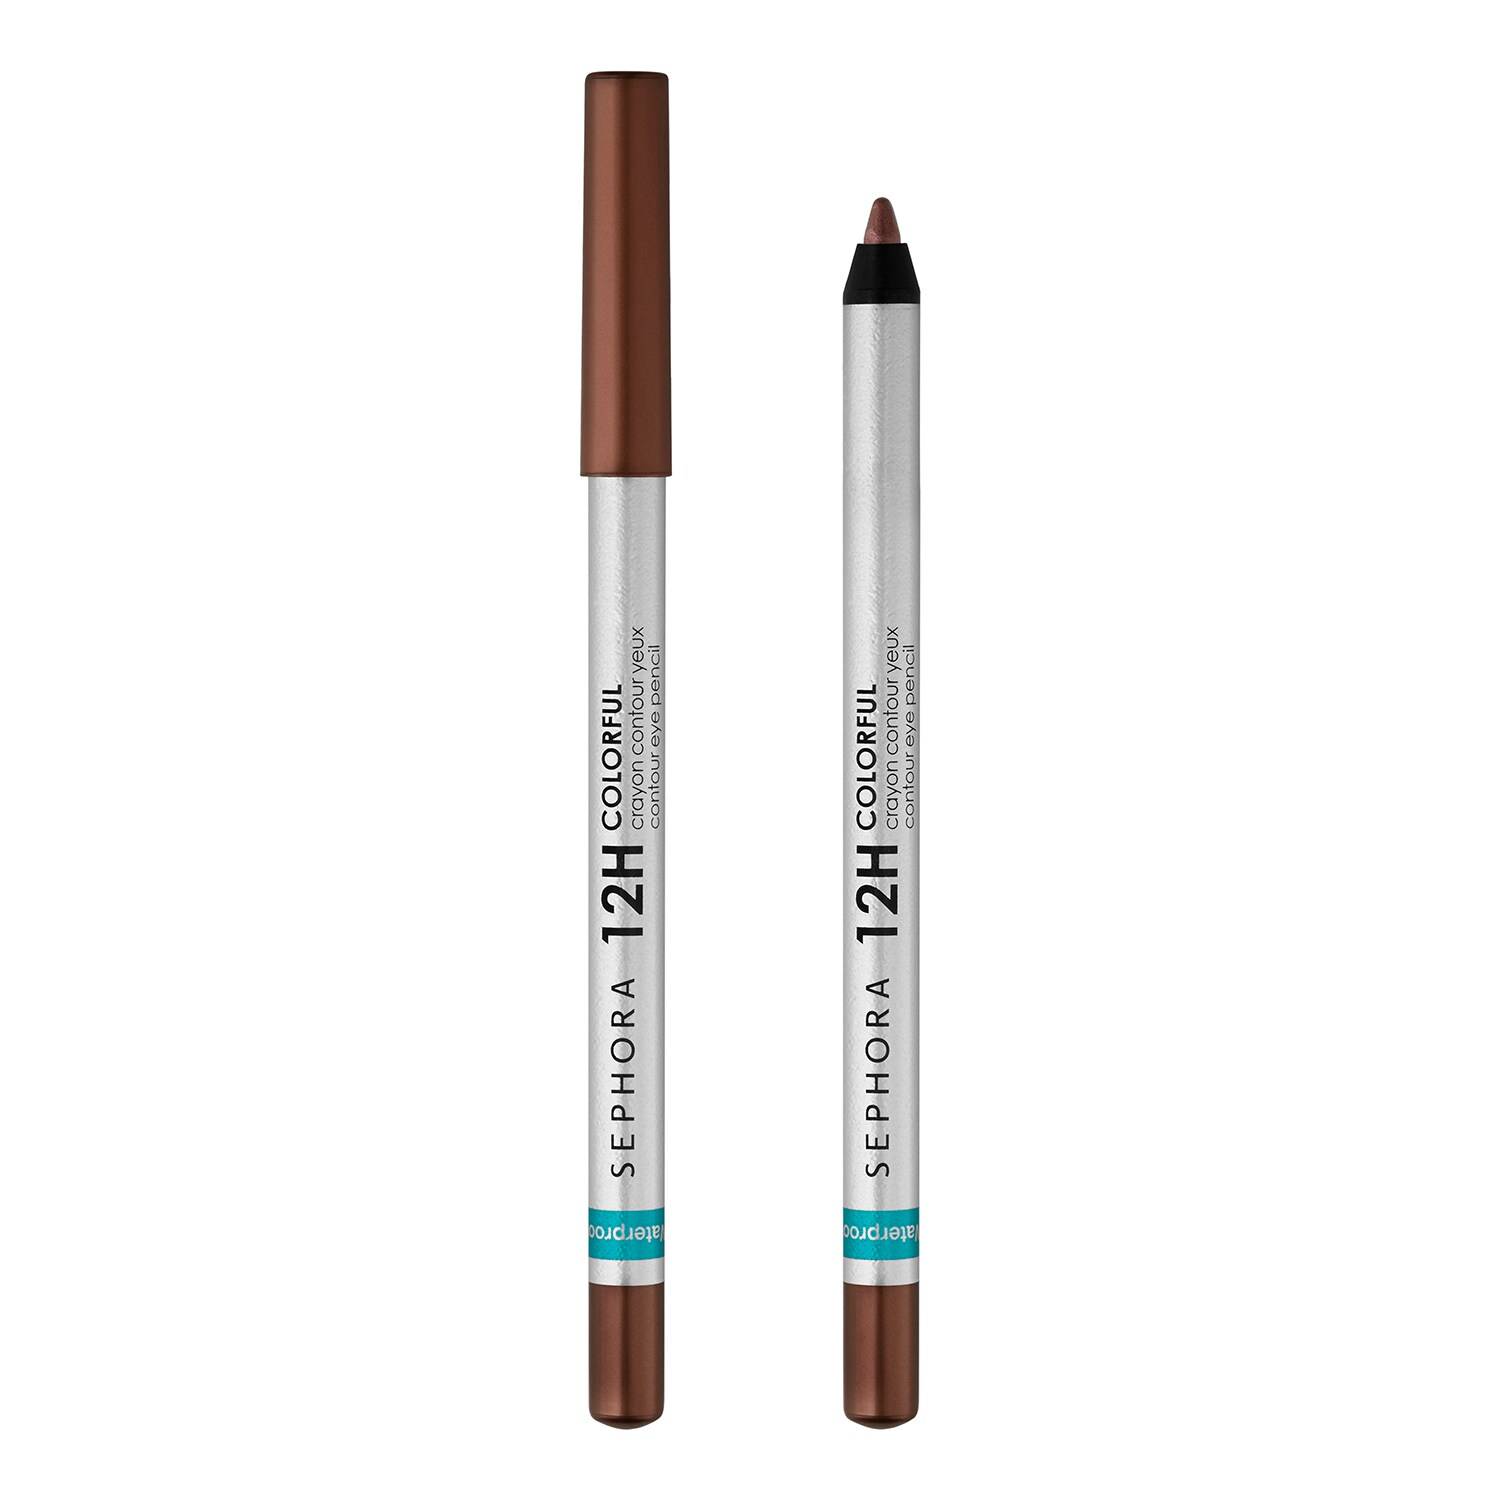 Sephora Collection 12H Coloful Contour Eye Pencil 1G 57 Rocknbrown - Shimmer